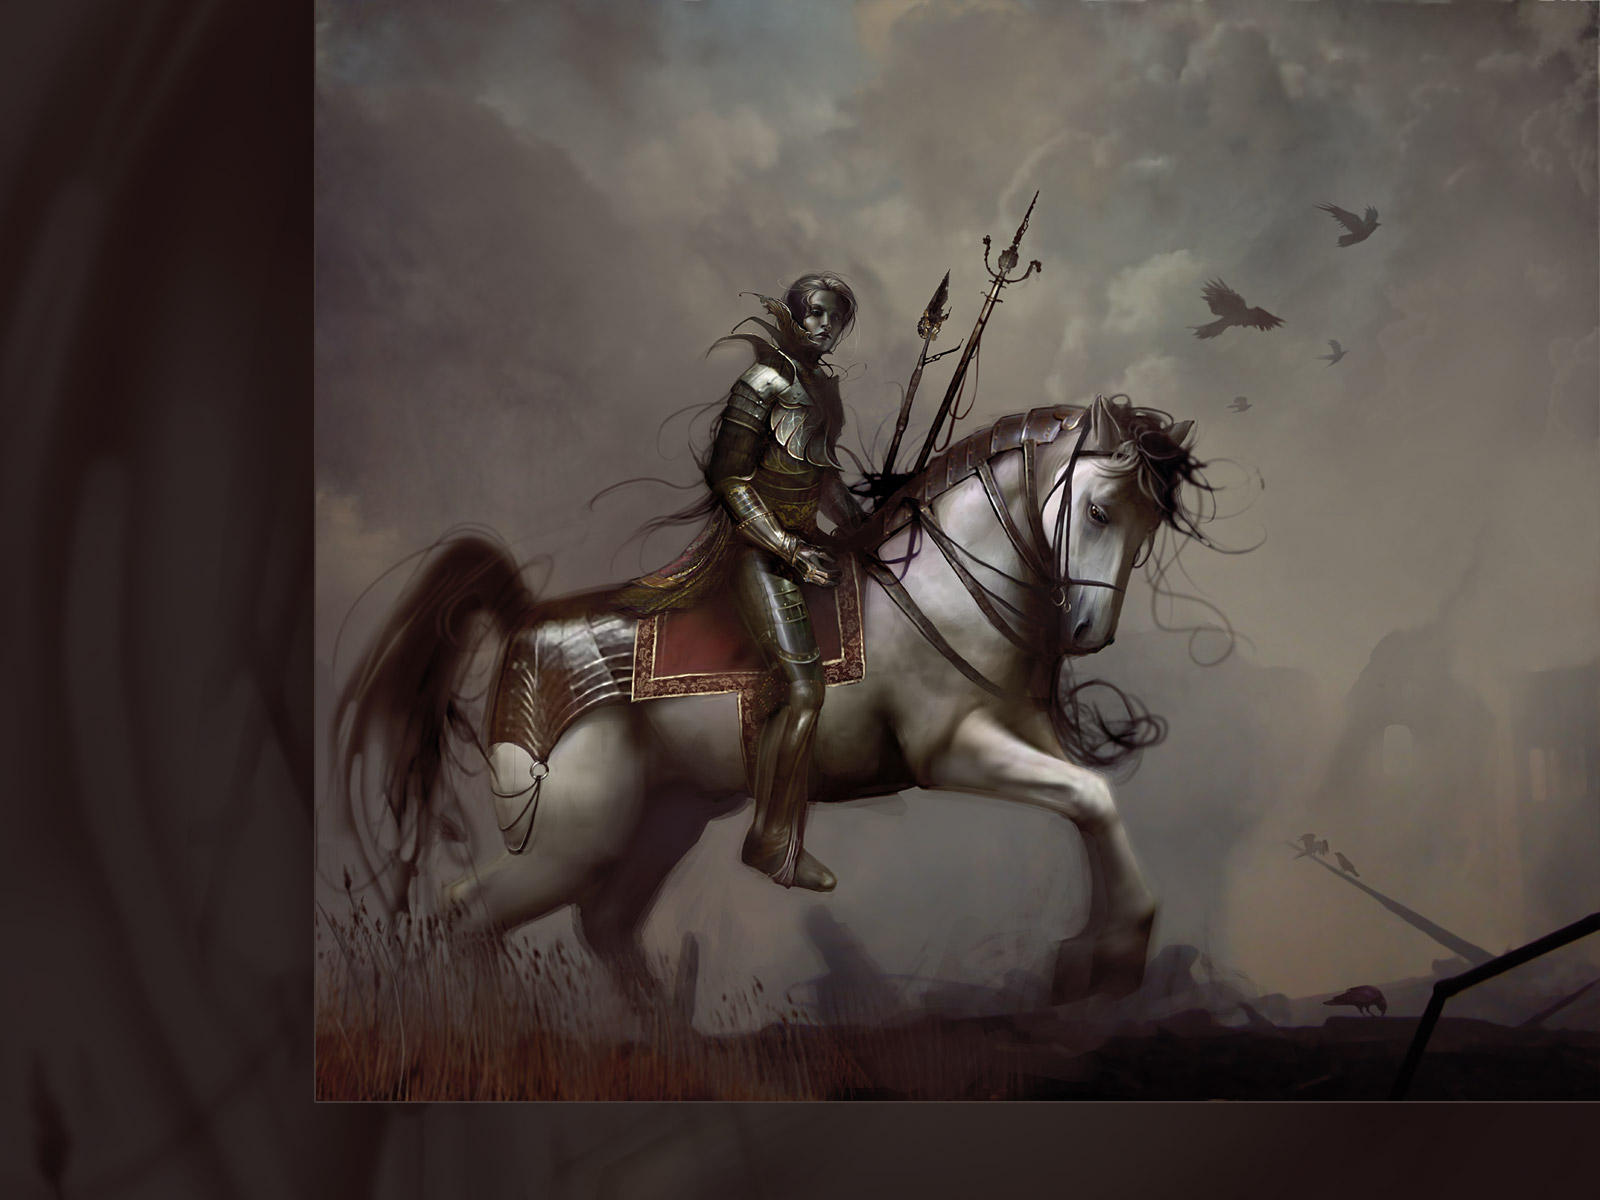 Galloping horse in a vibrant digital artwork by Linda Bergkvist.